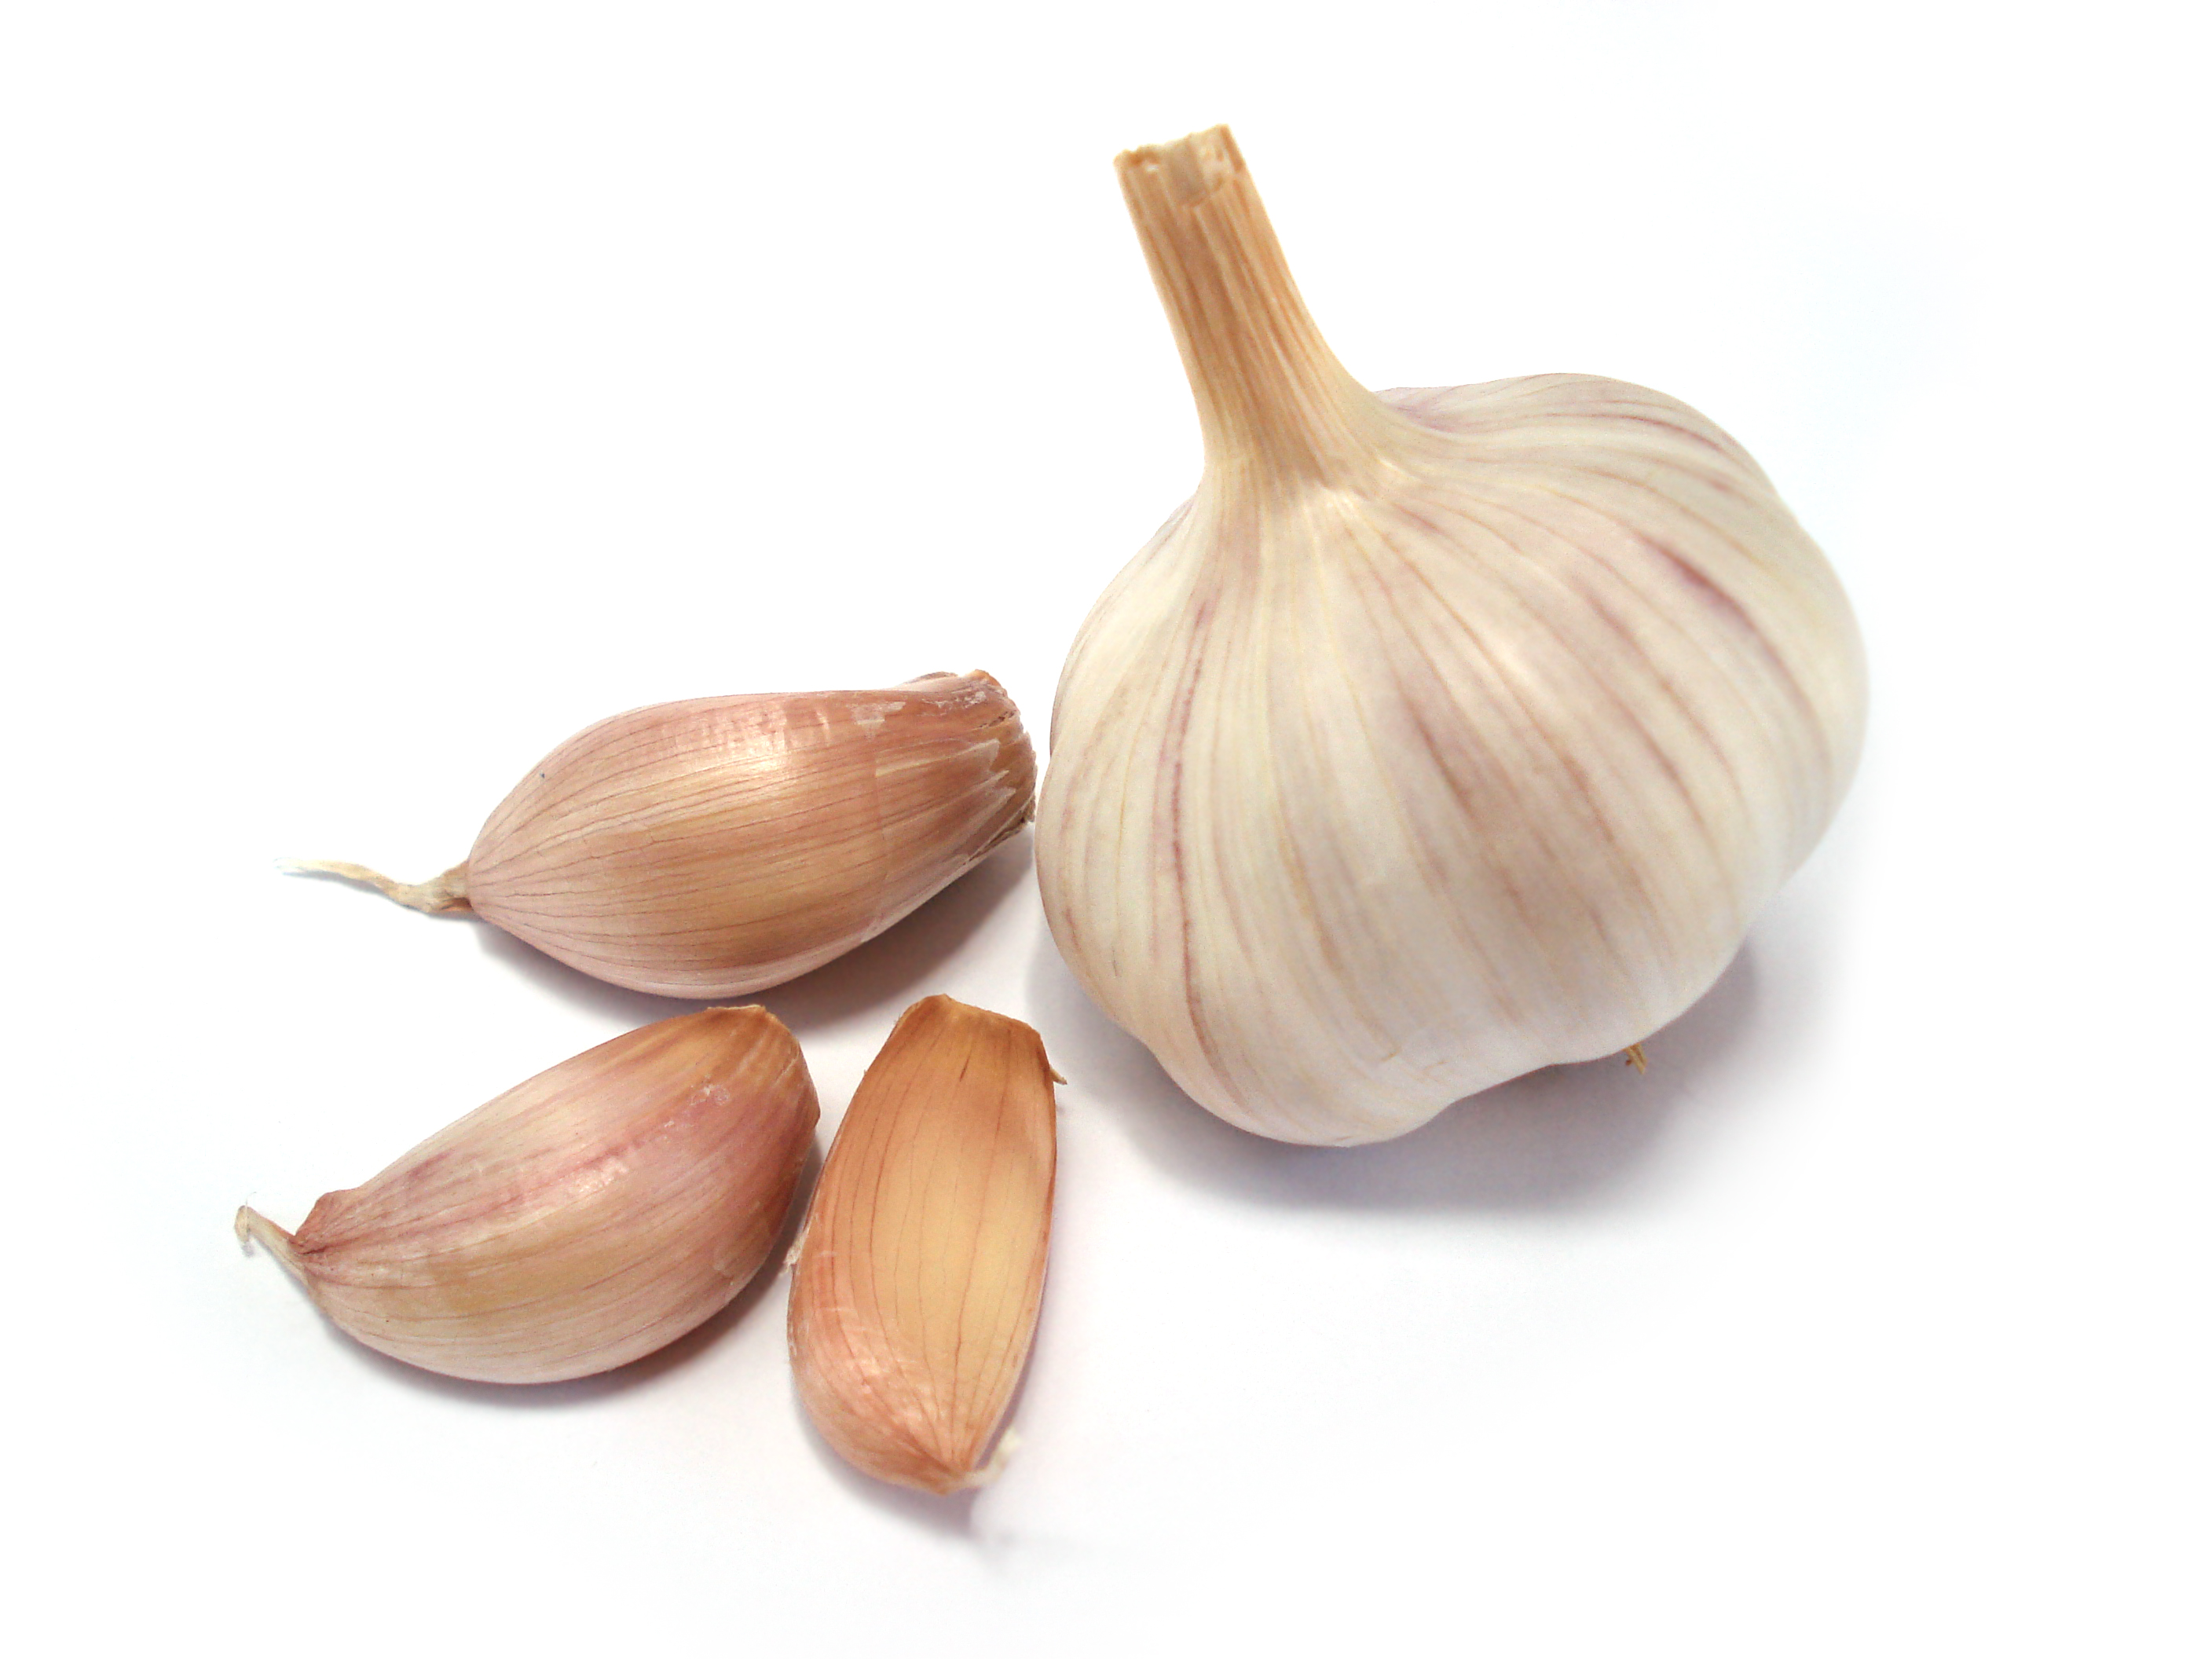 Garlic growing guide